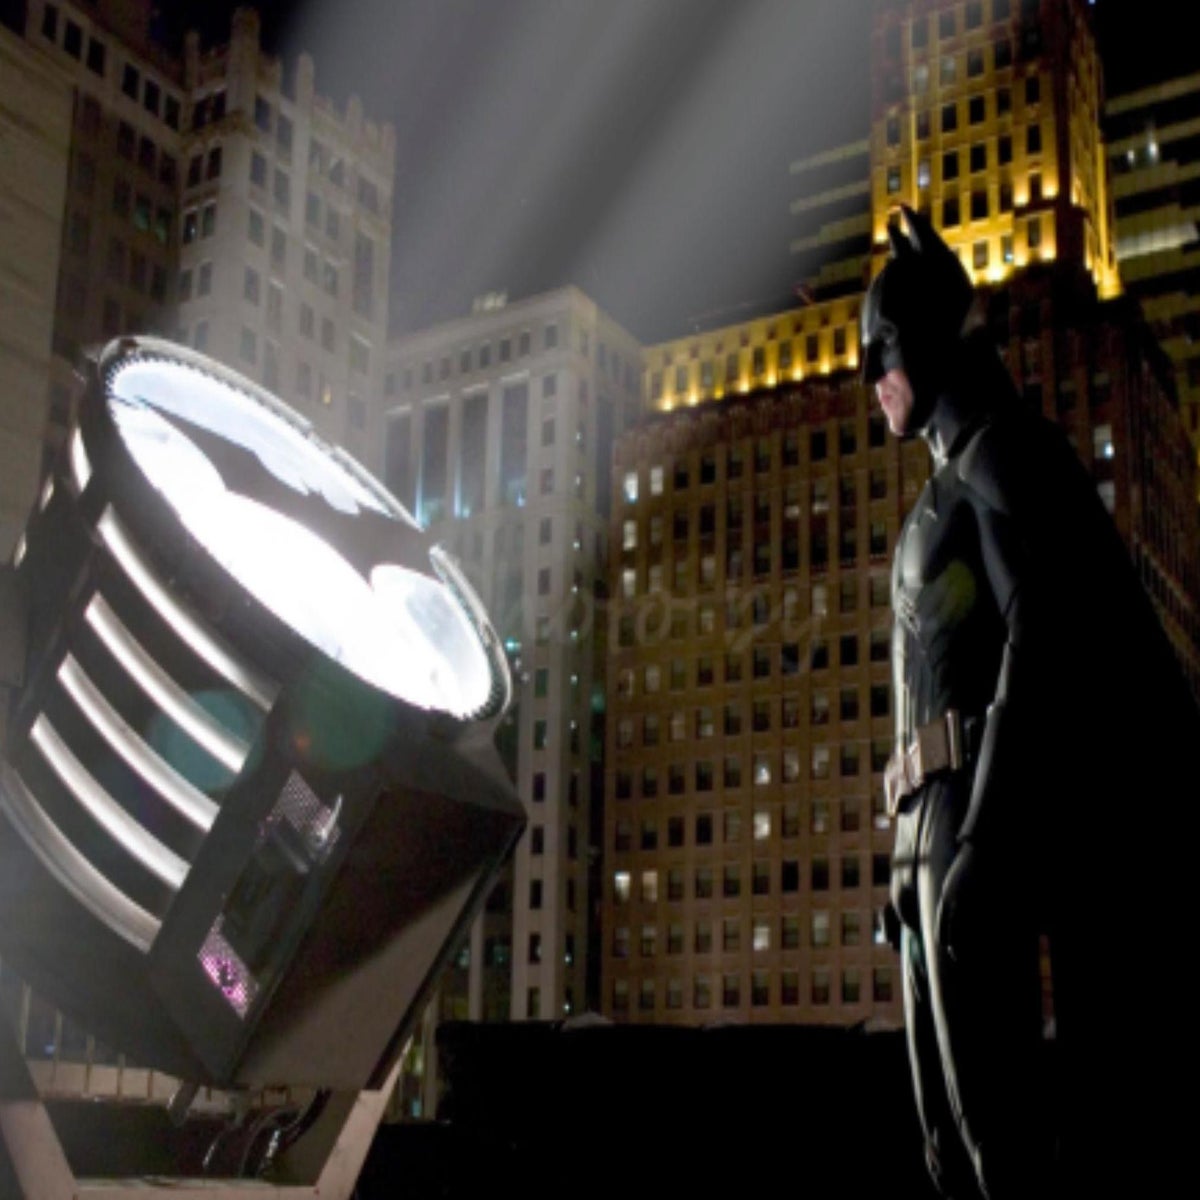 Batman 80th anniversary: Bat signal to shine over cities tonight